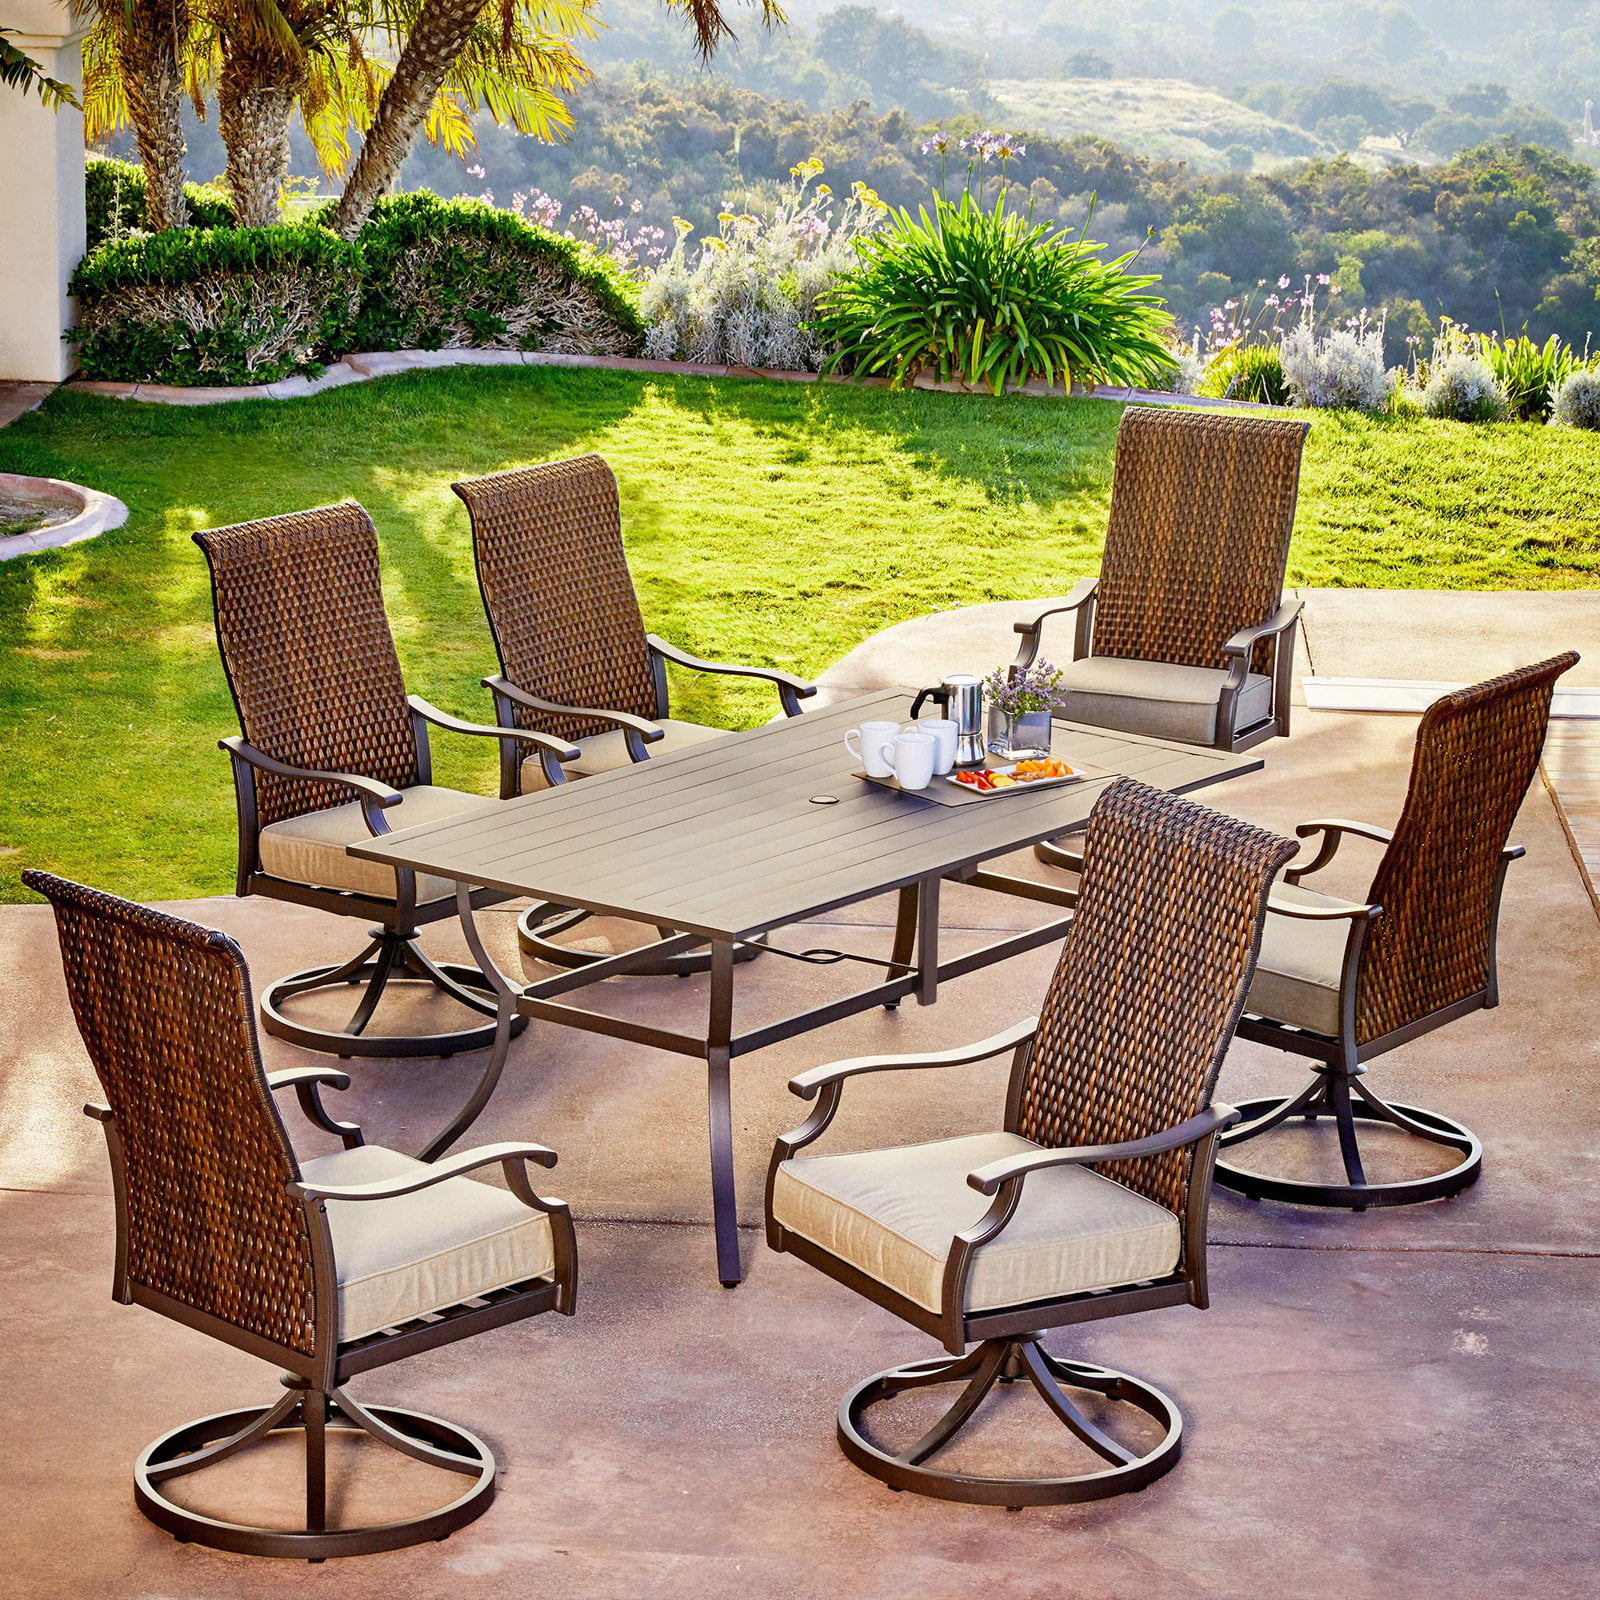 Mountain Back Wicker Patio Furniture Set 4 Piece - Buy Sunsitt Outdoor ...